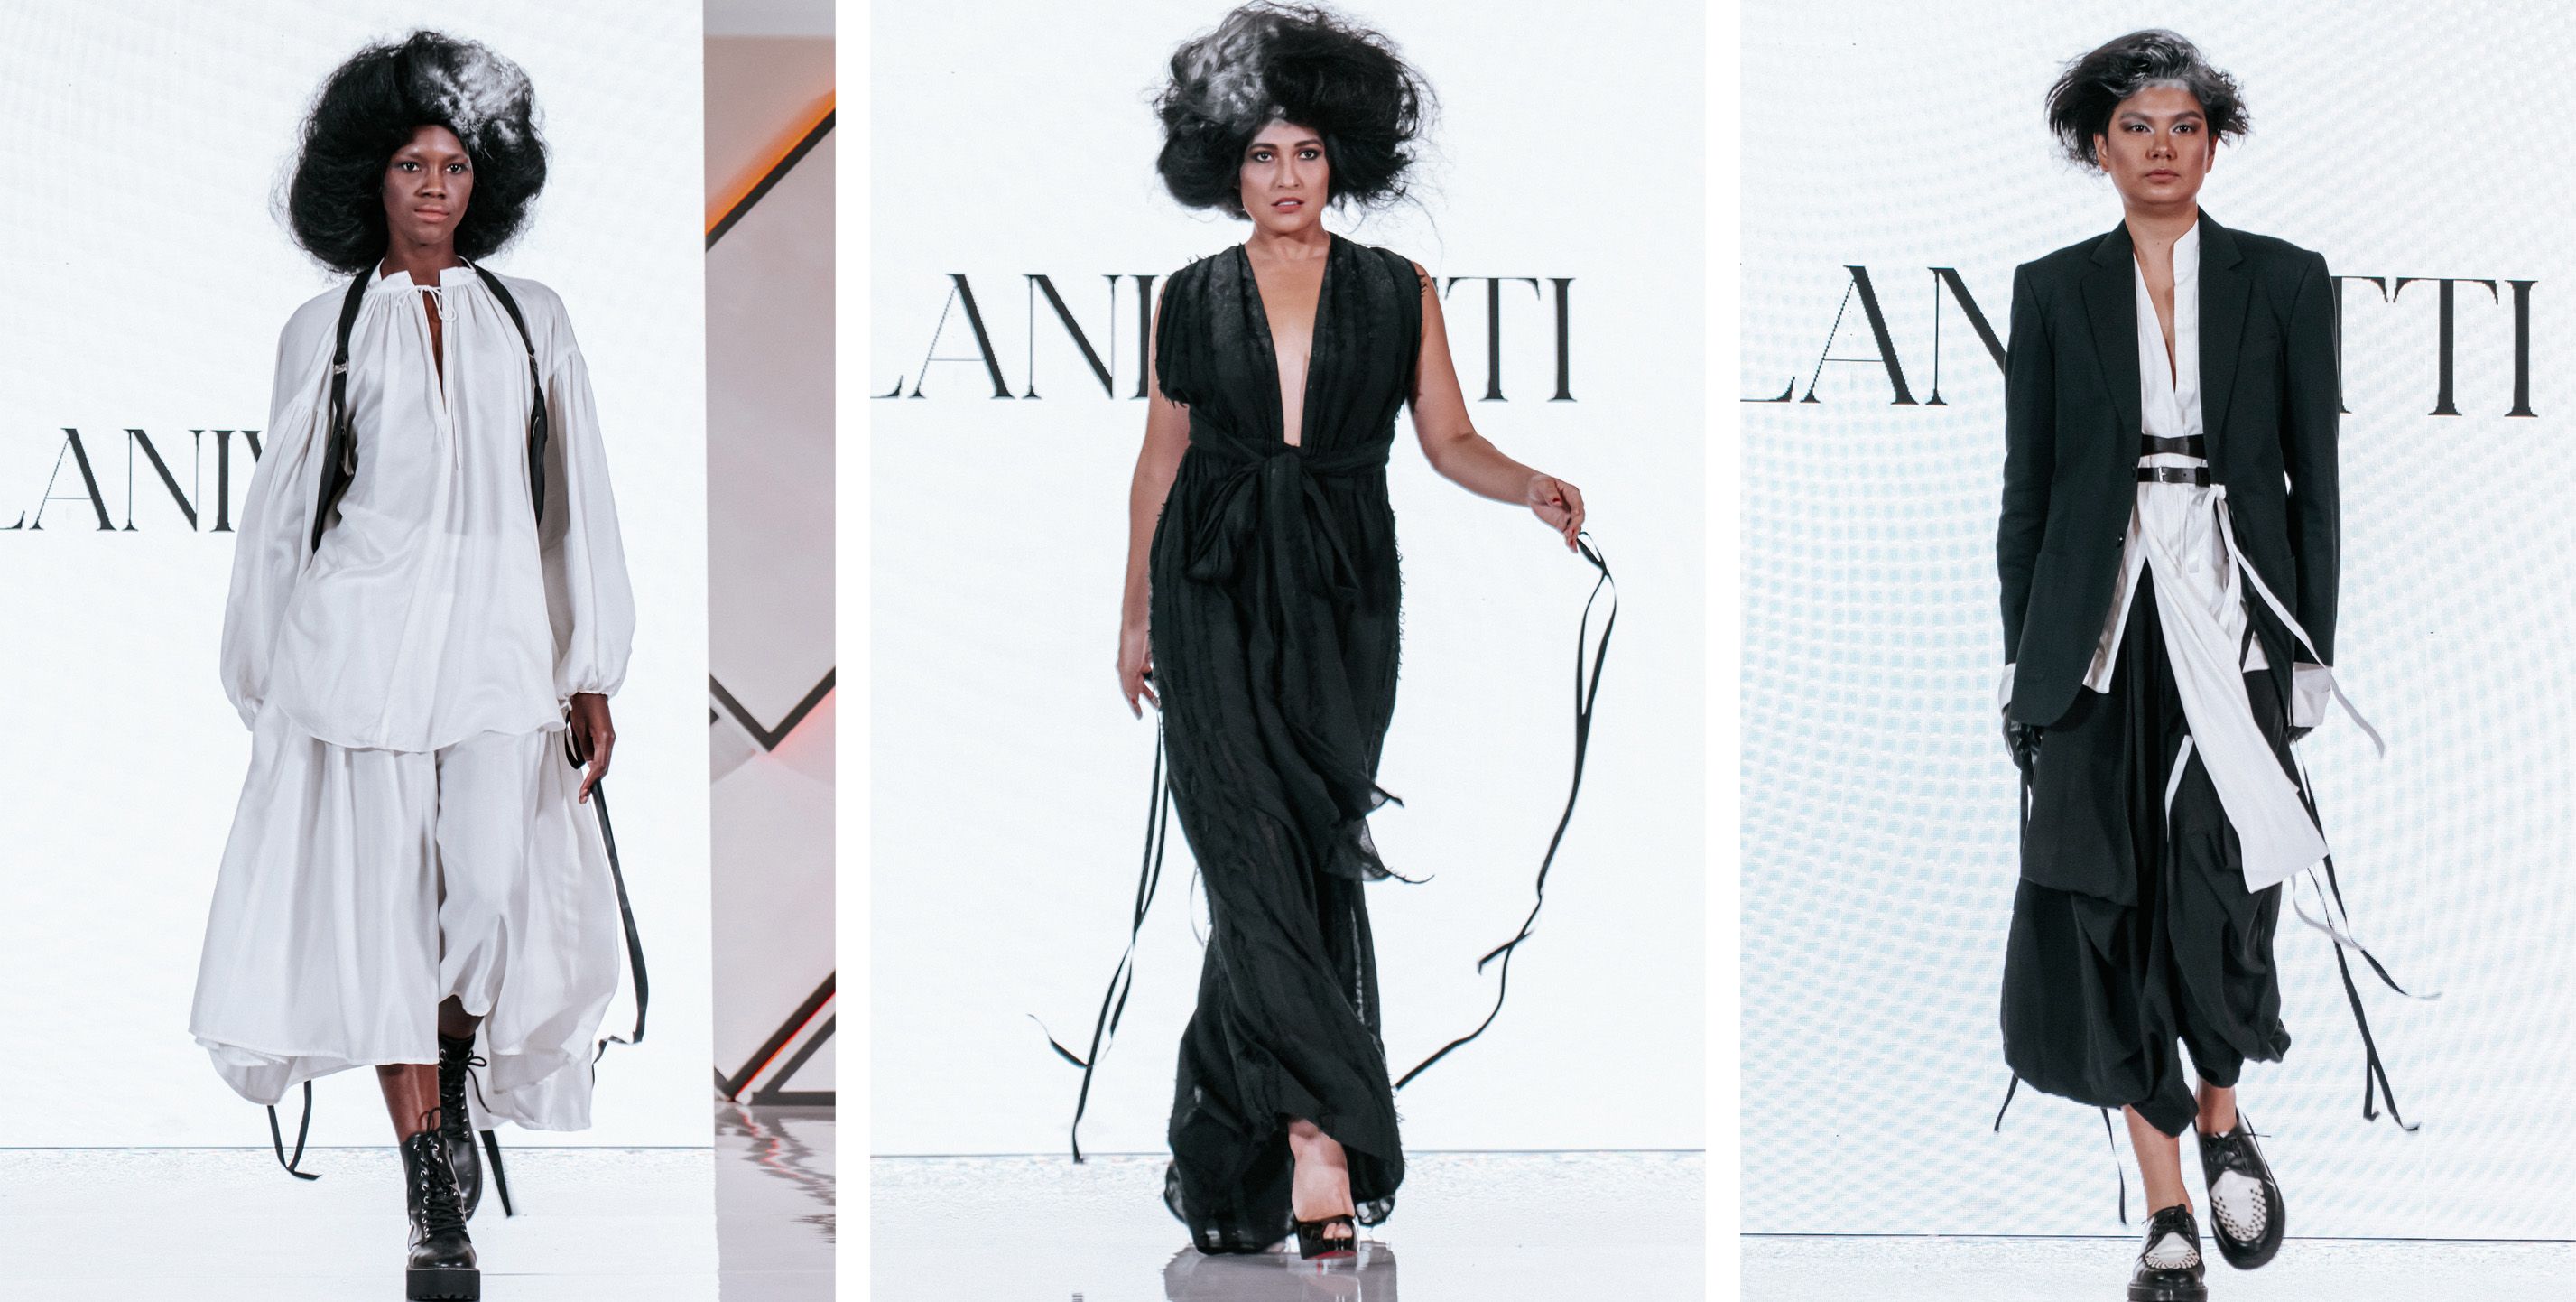 Indonesia Beauty & Fashion Trunk Gelar Fashion Show Karya Desainer